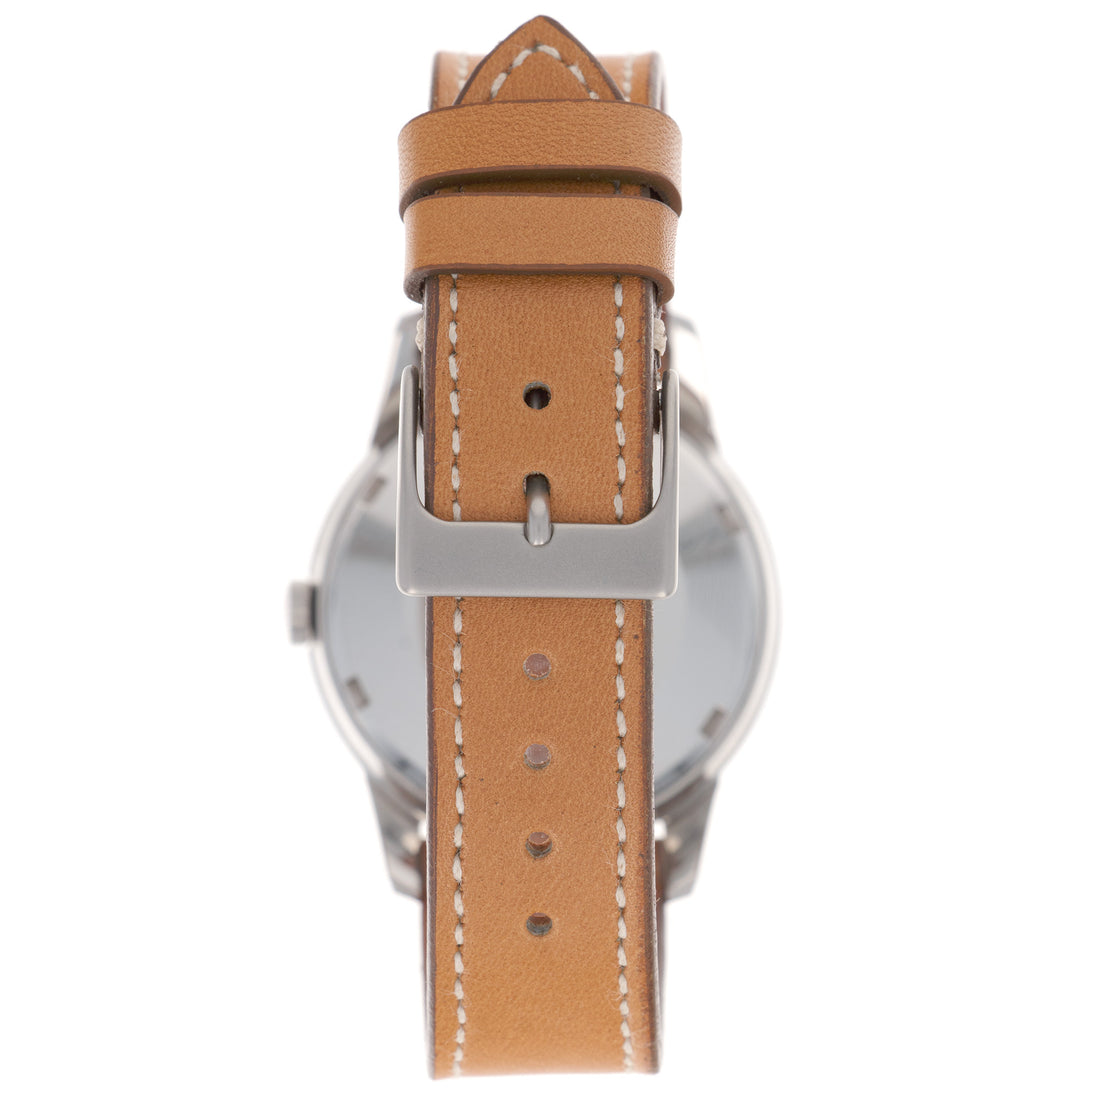 Vacheron Constantin Stainless Steel Automatic Watch Ref. 6562